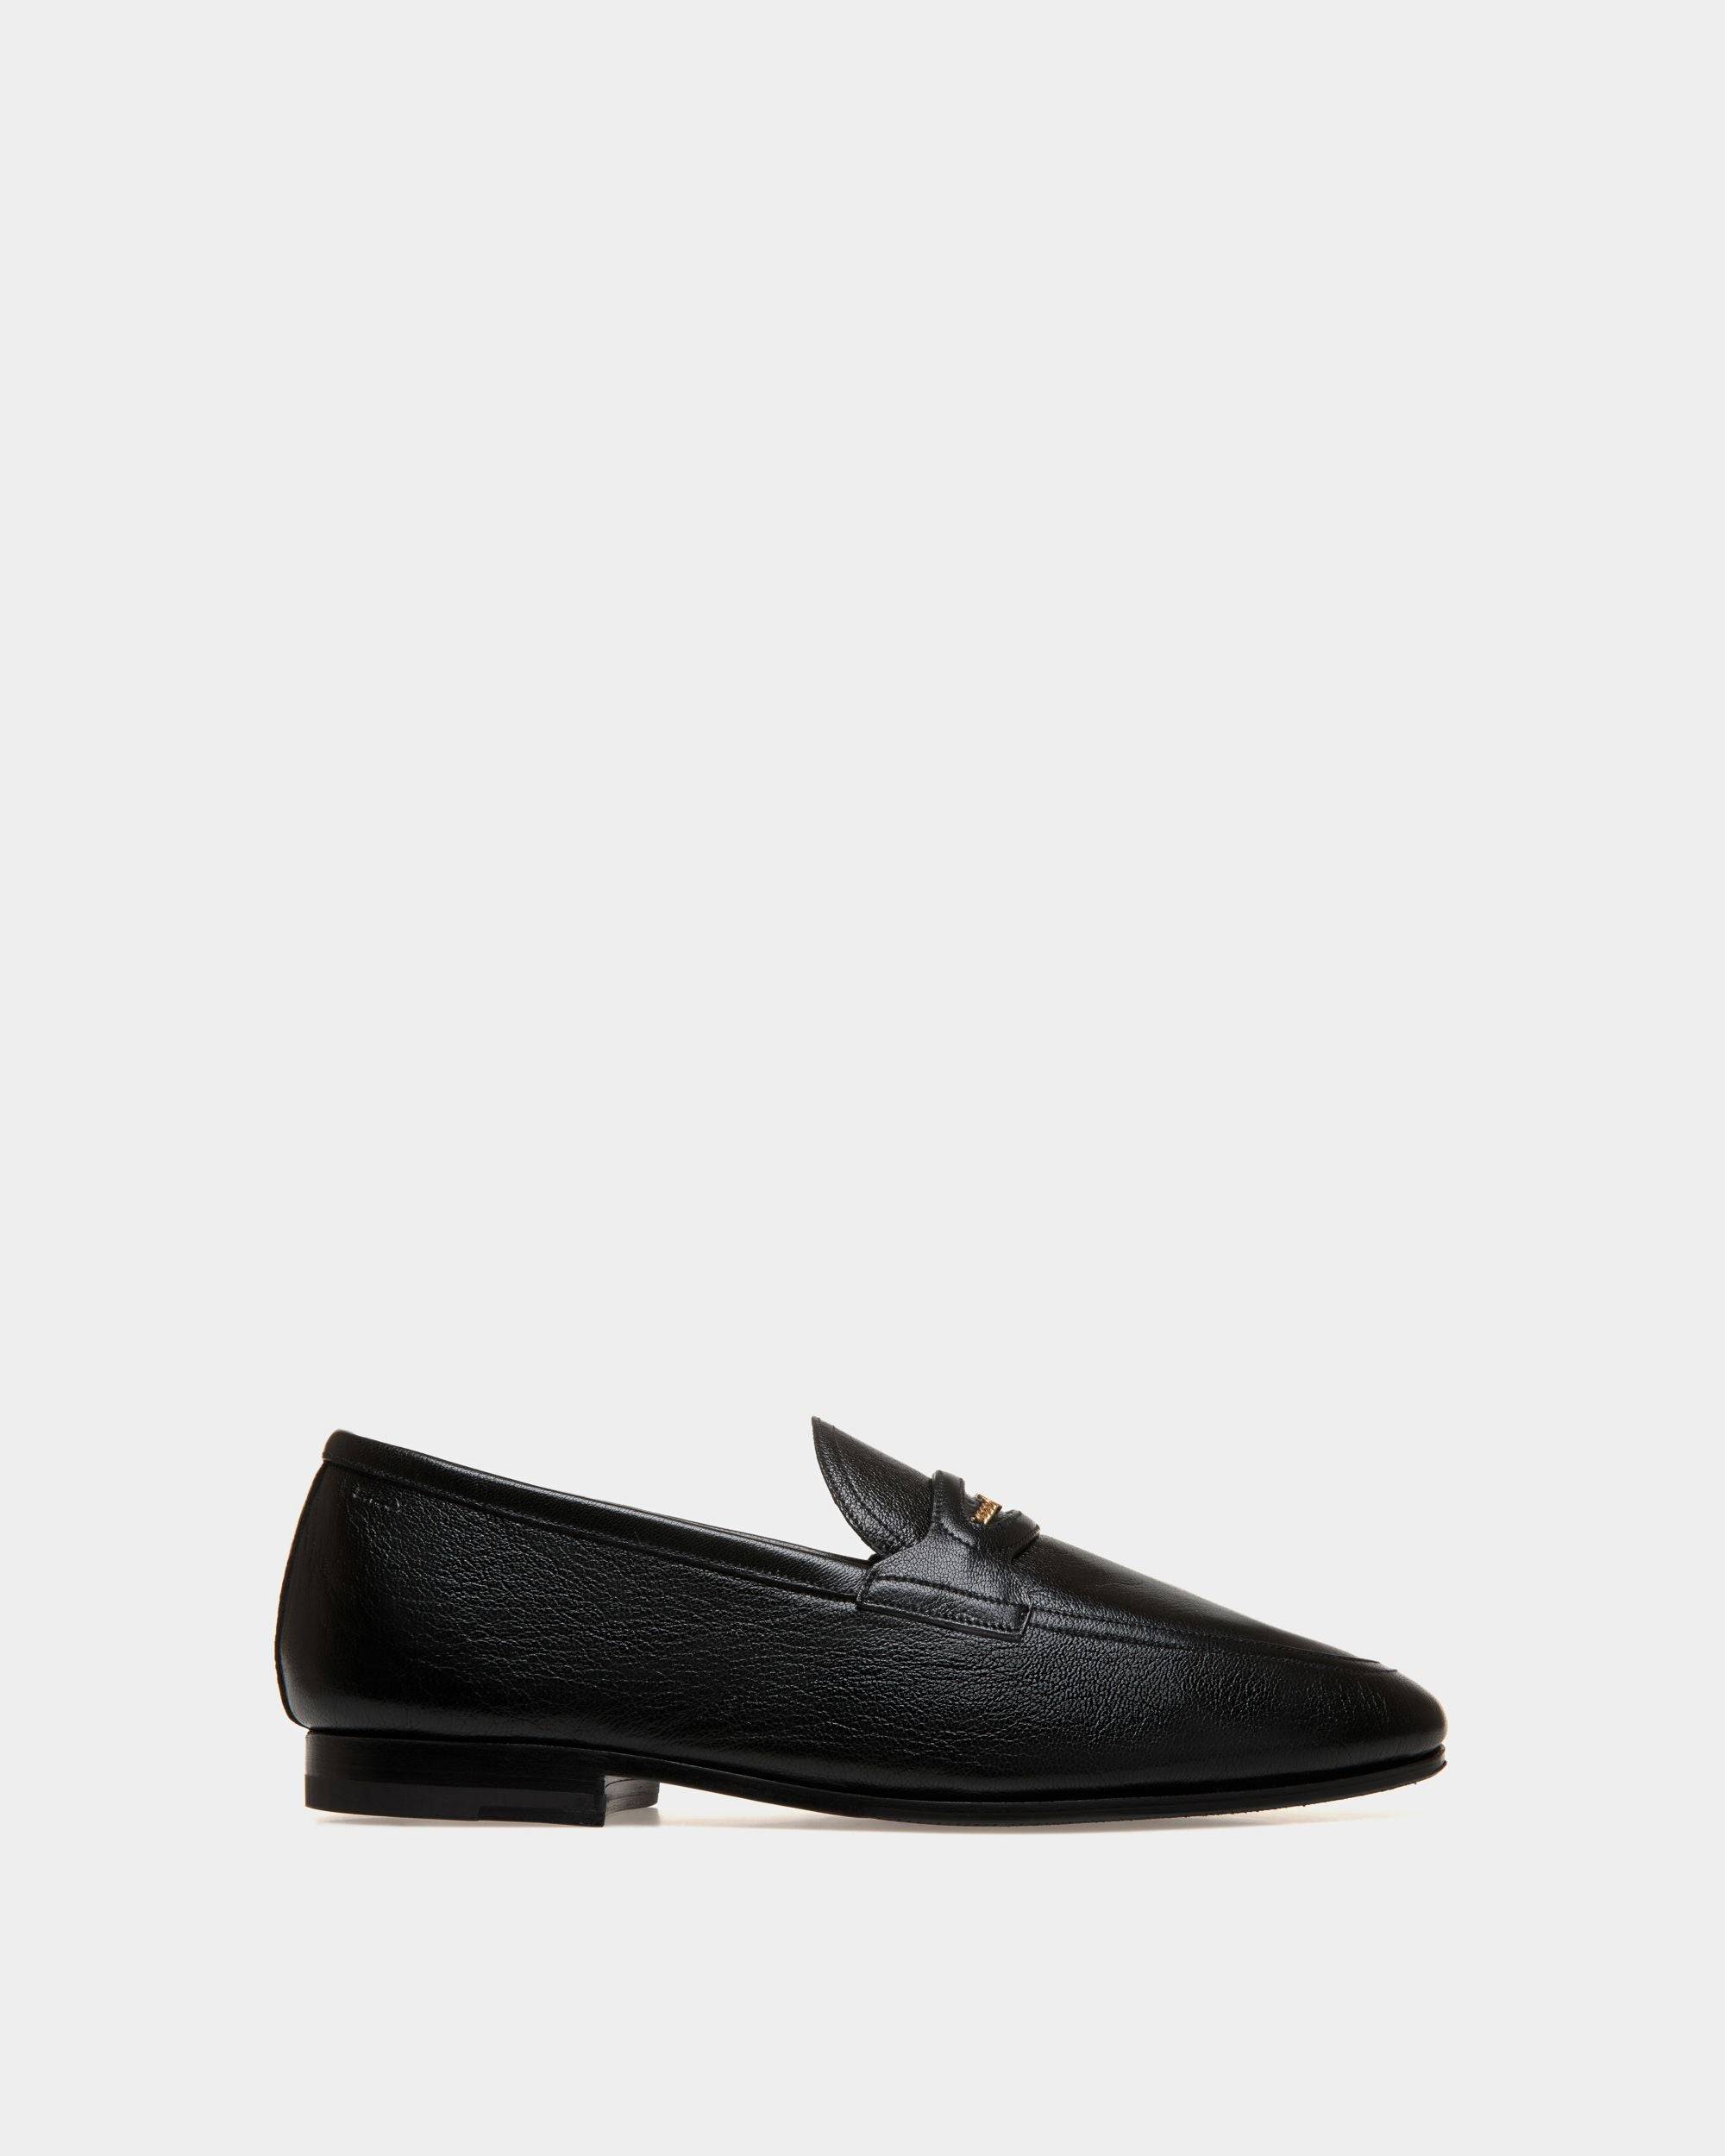 Men's Plume Loafer in Black Grained Leather | Bally | Still Life Side